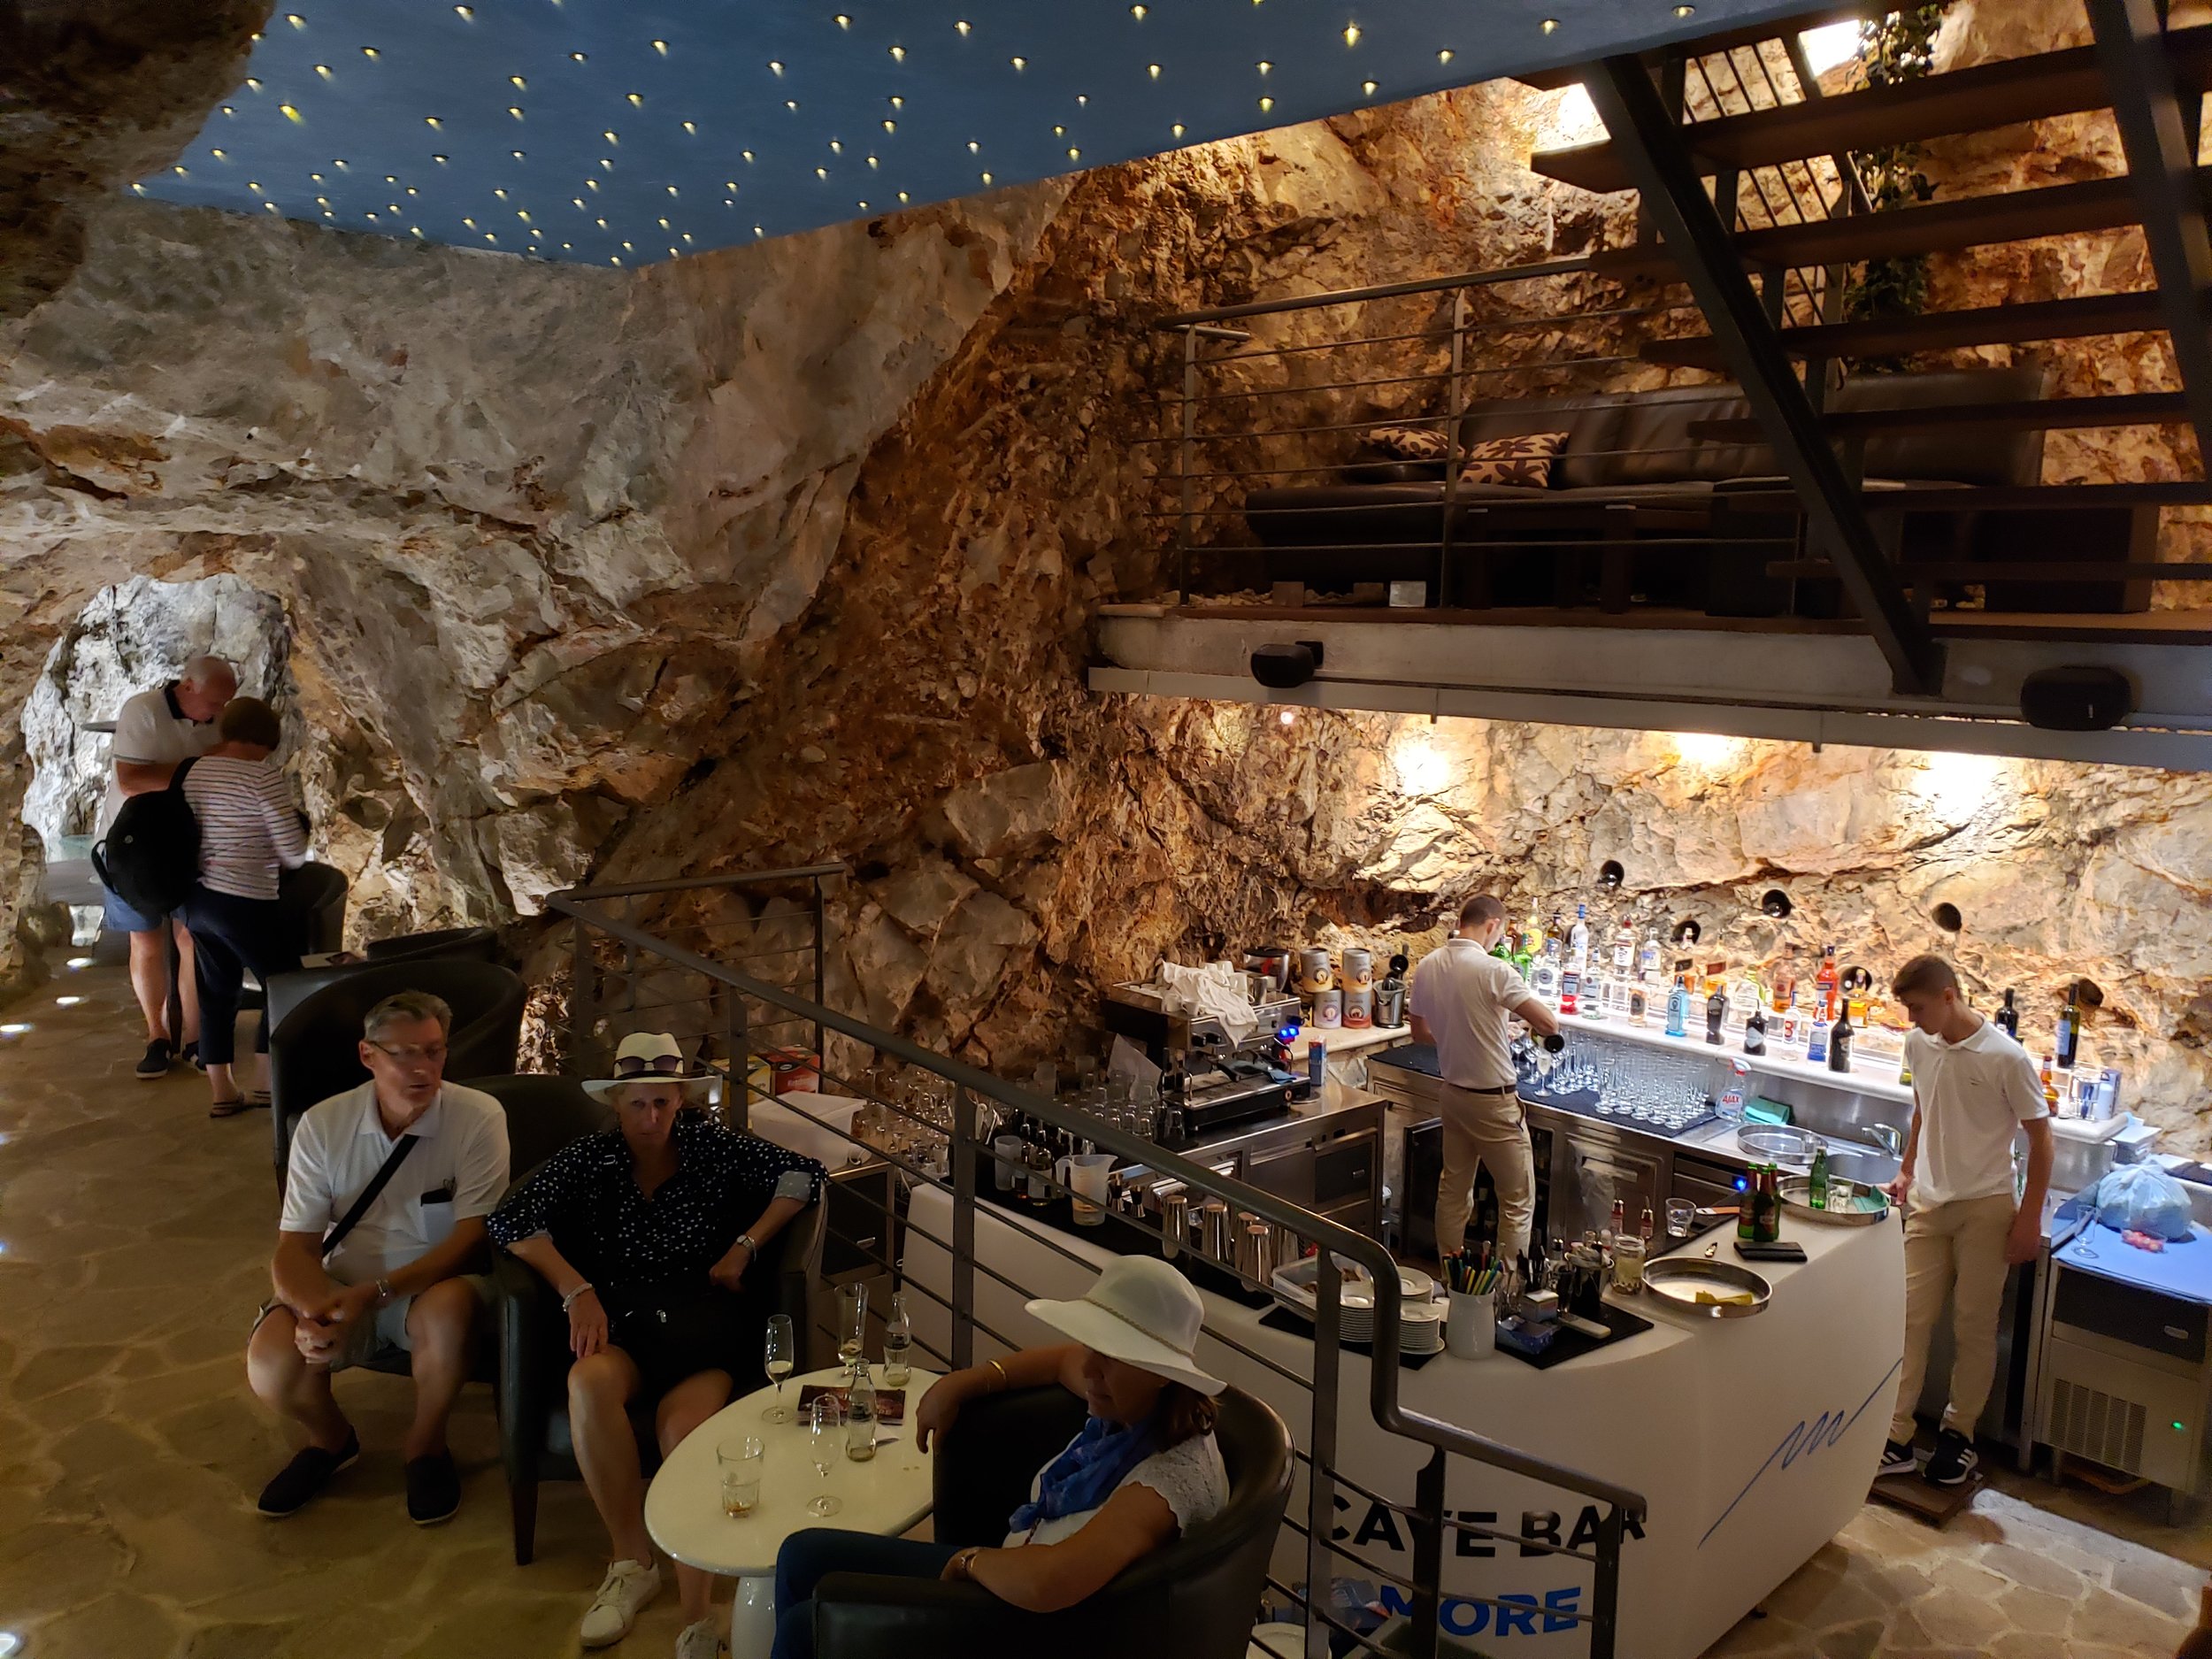  More Cave Bar 